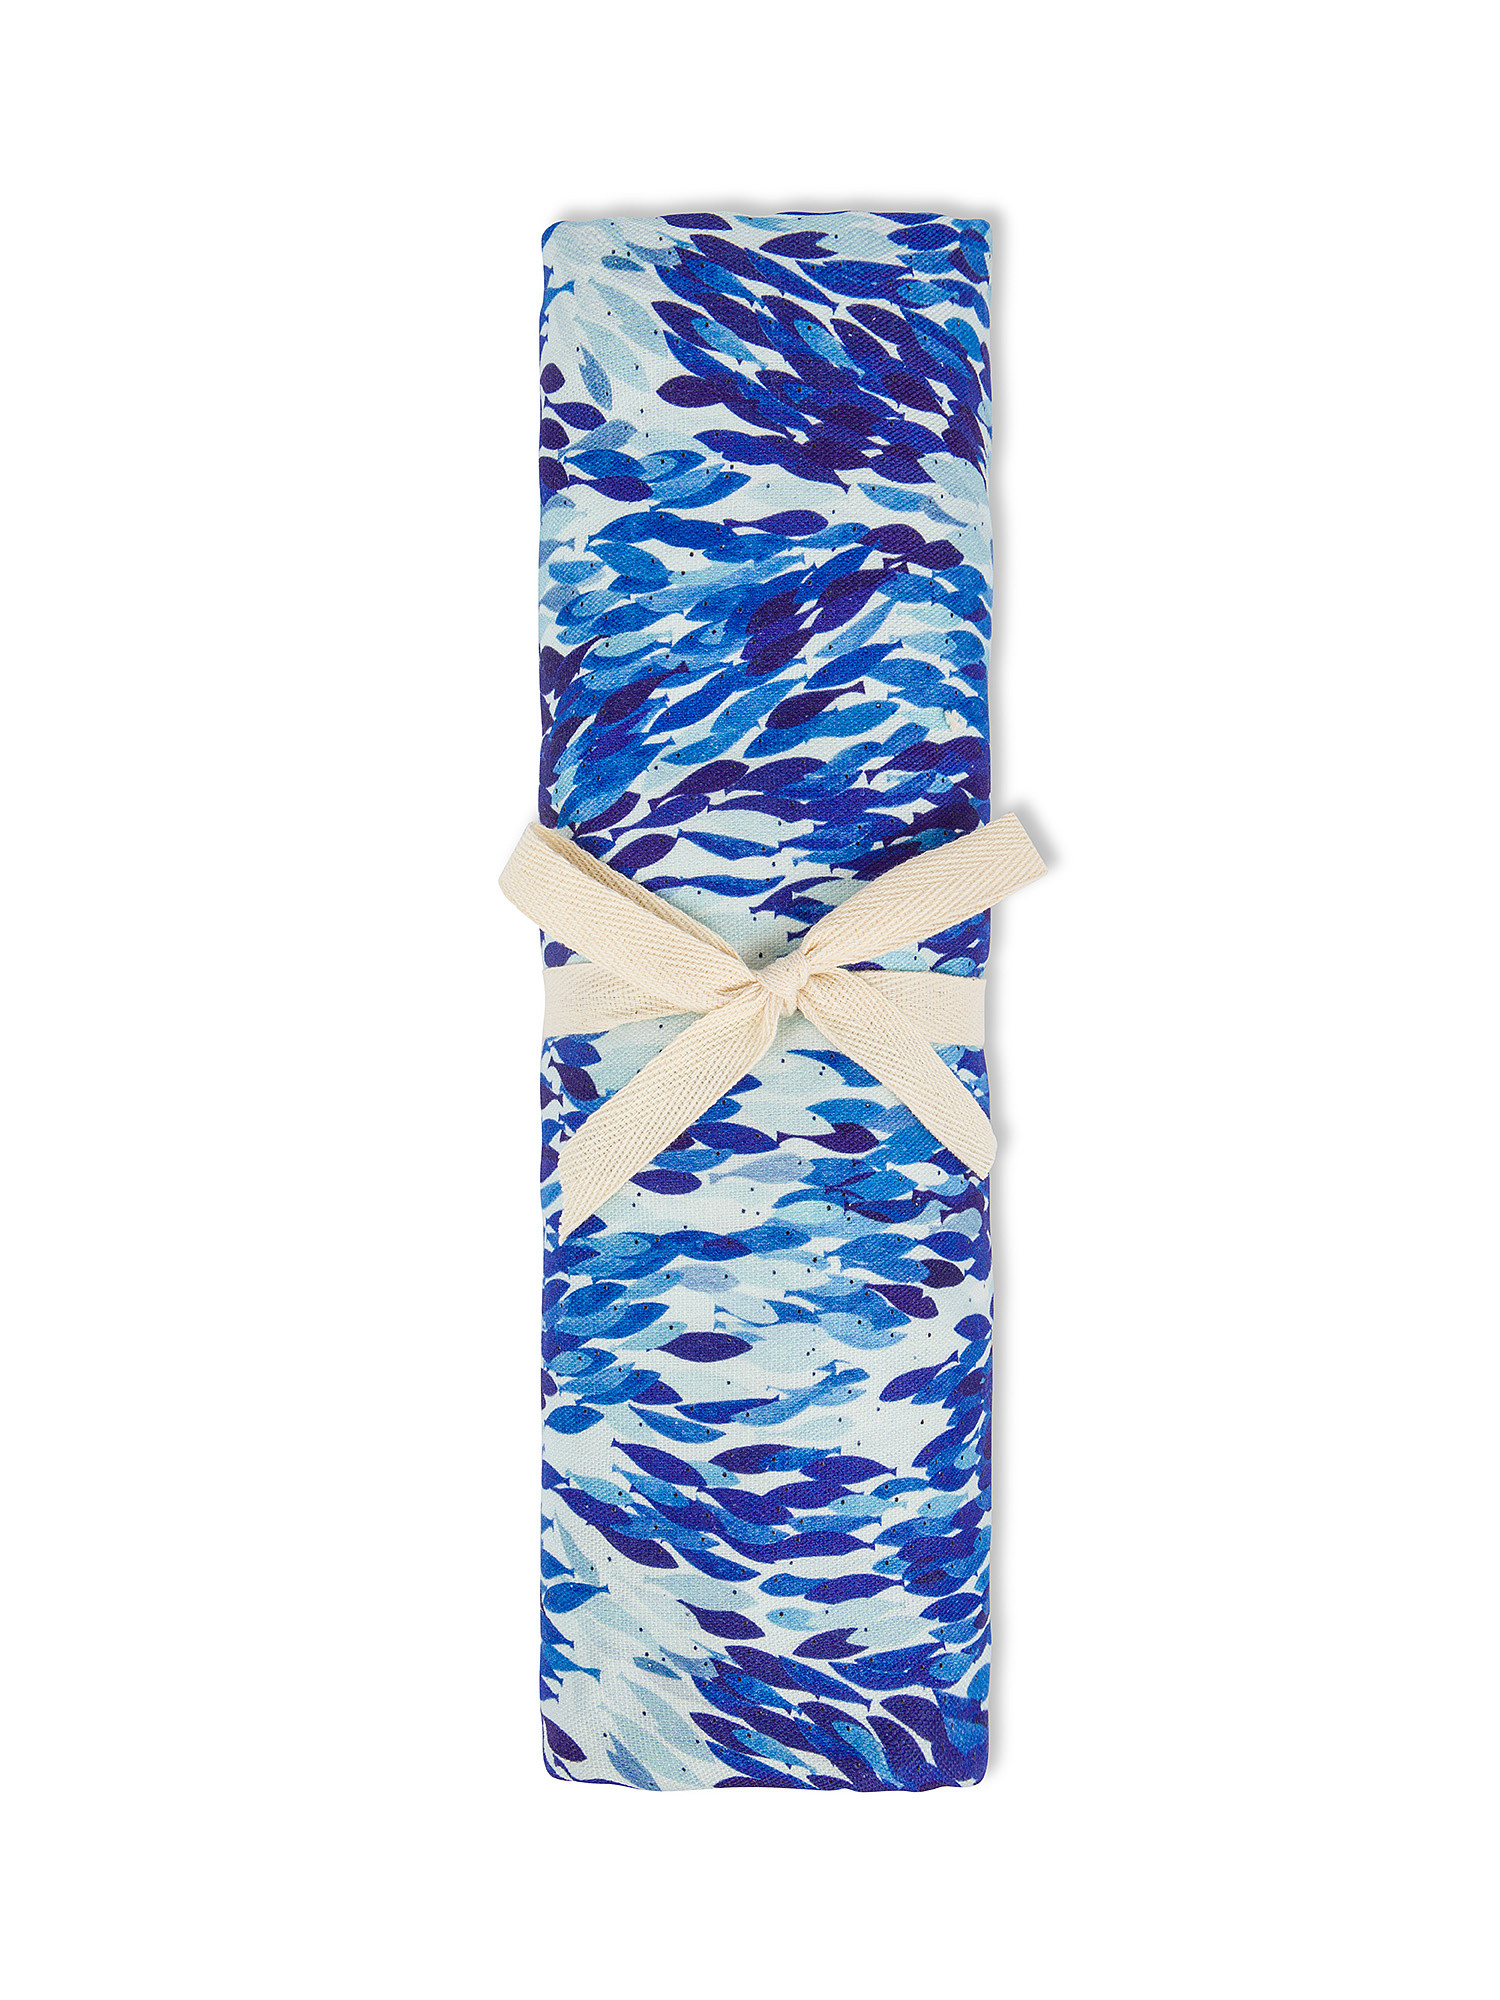 Telo arredo puro cotone stampa pesci, Azzurro, large image number 1